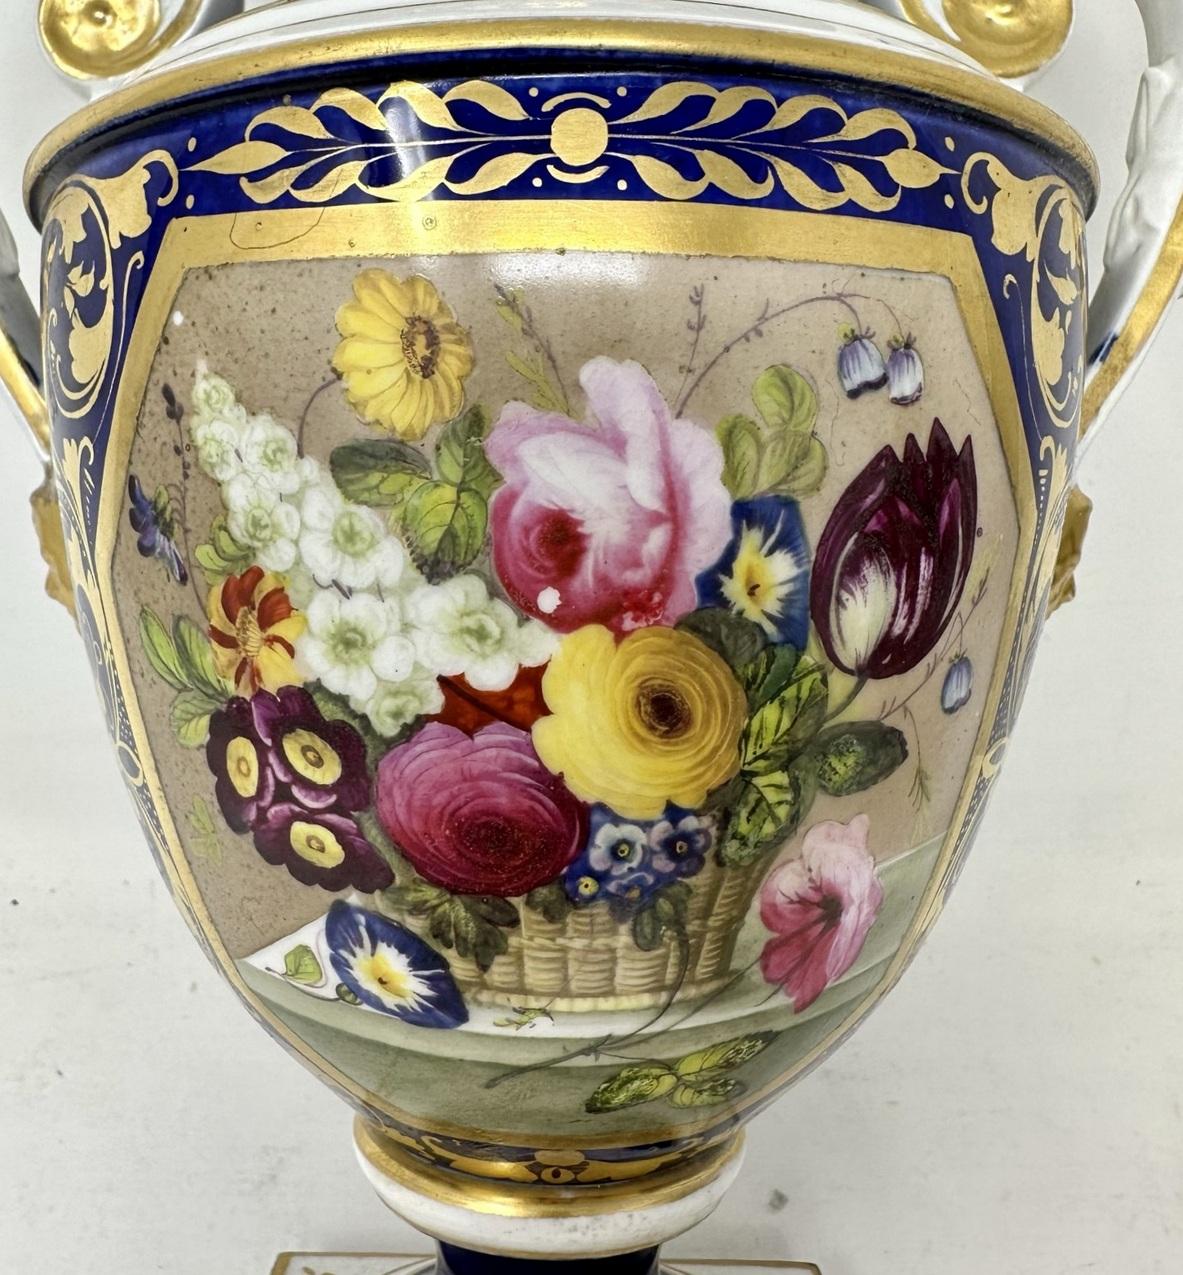 Antique Garniture English Royal Crown Derby Porcelain Vases by Thomas Steel 19C  For Sale 3